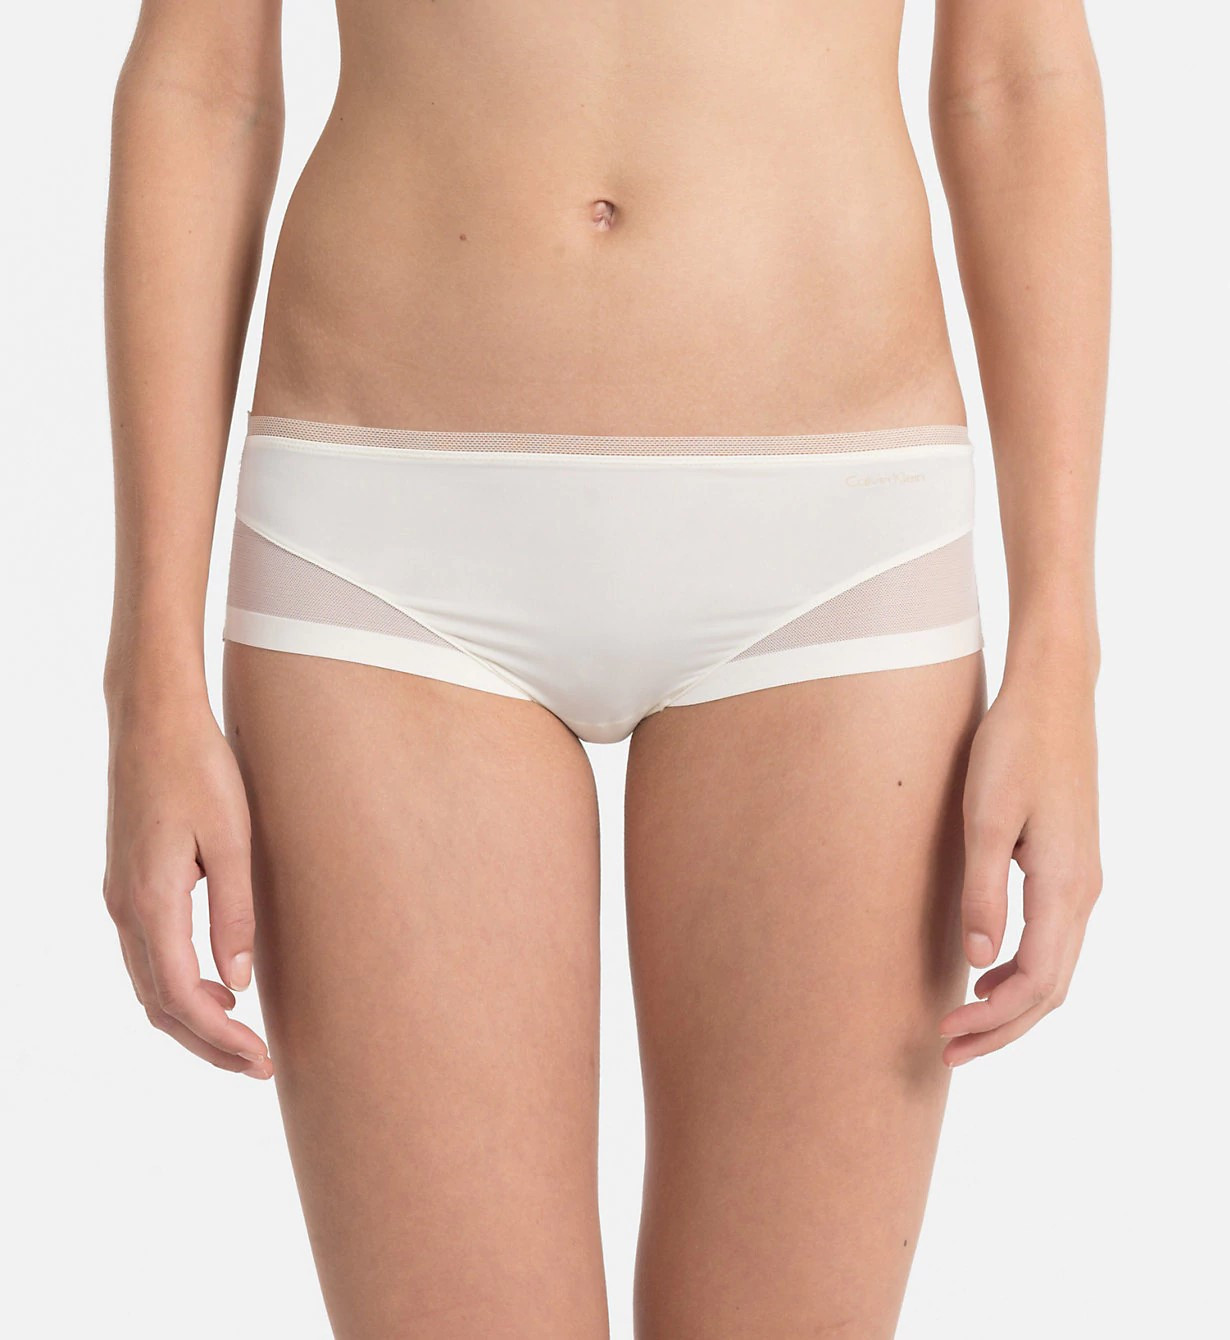 Kalhotky slonová kost S model 6060854 - Calvin Klein